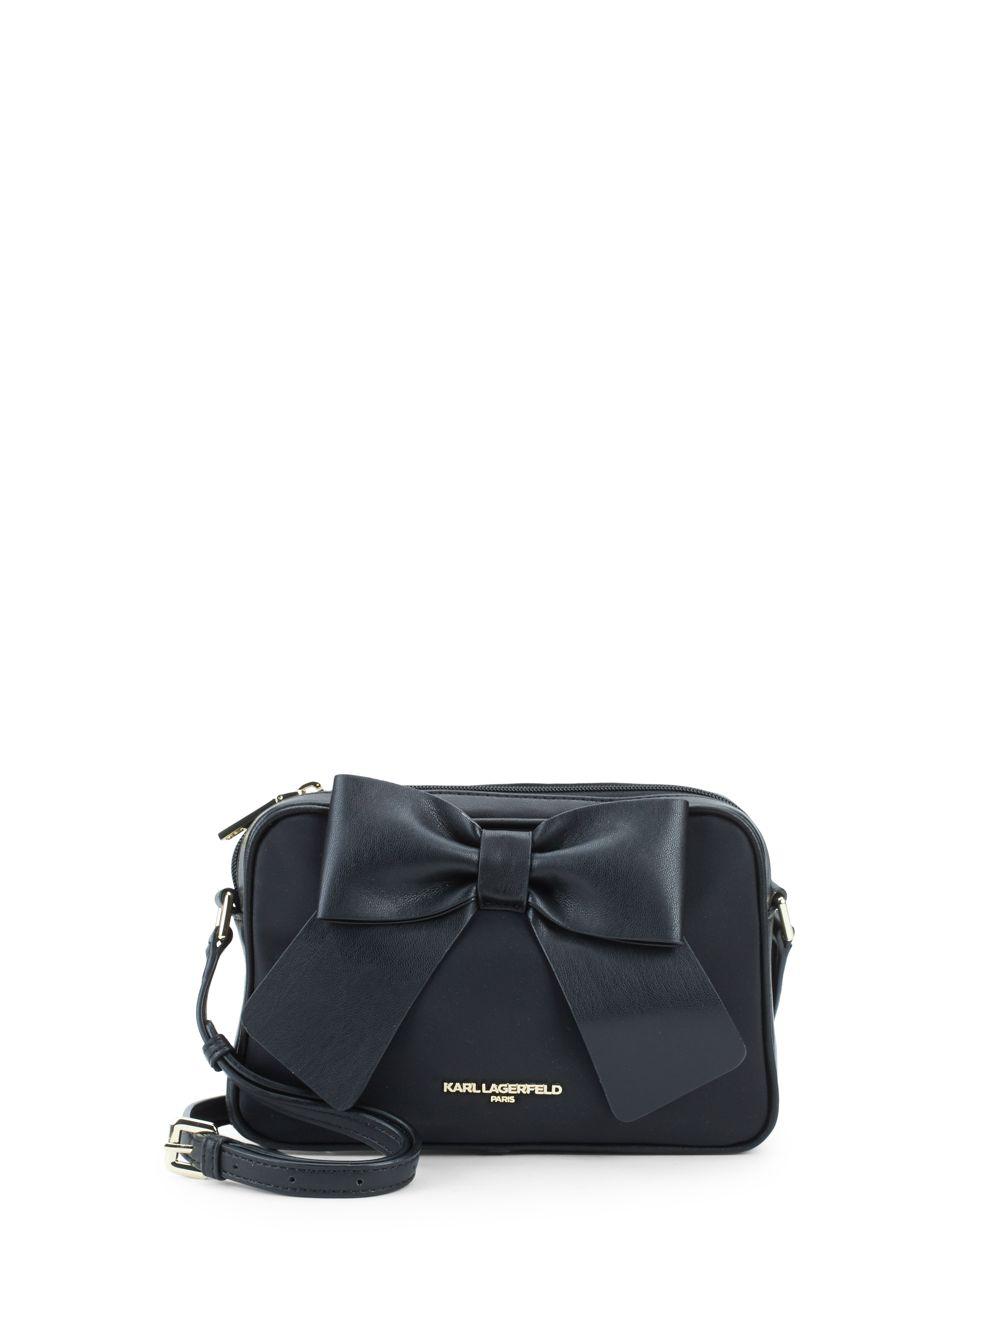 Karl Lagerfeld Bow Crossbody Bag in Black | Lyst